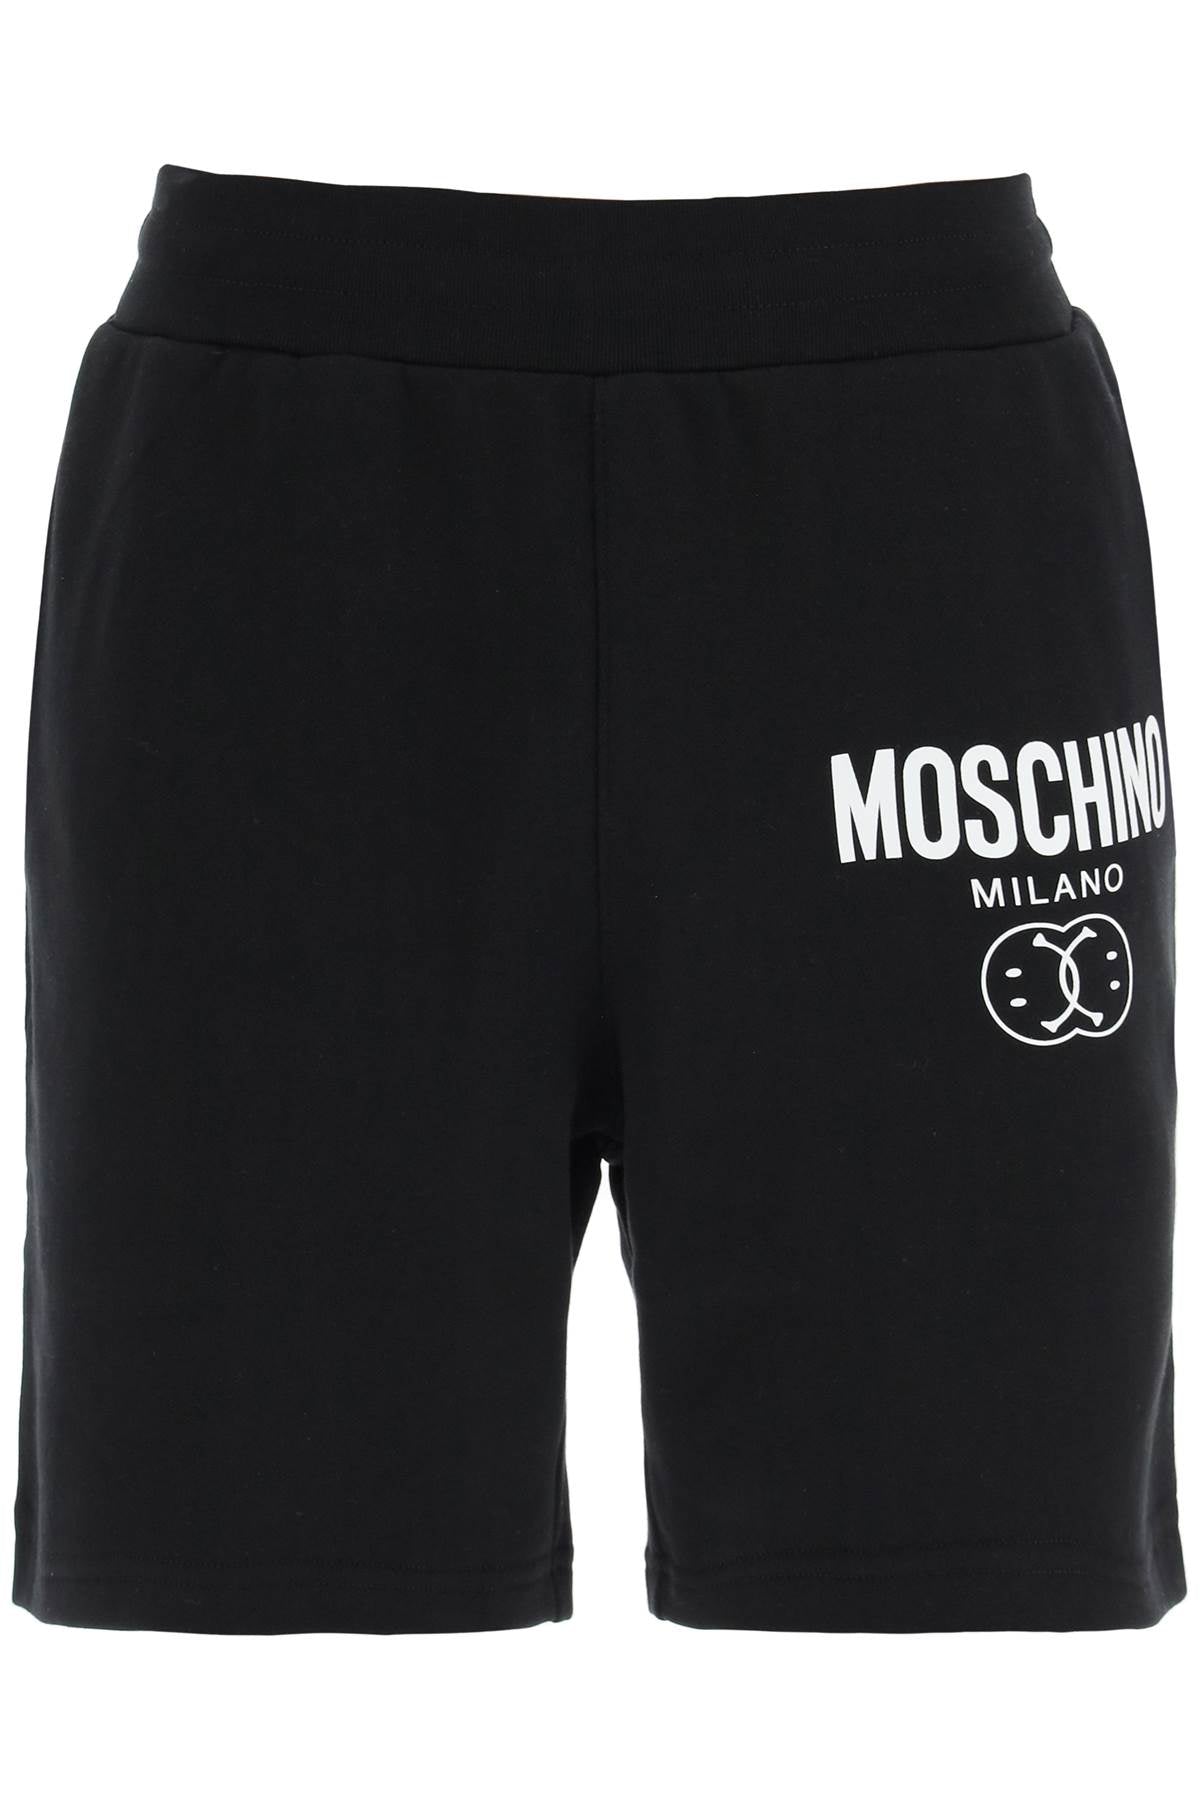 Moschino 'double question mark' logo sweatshorts-0